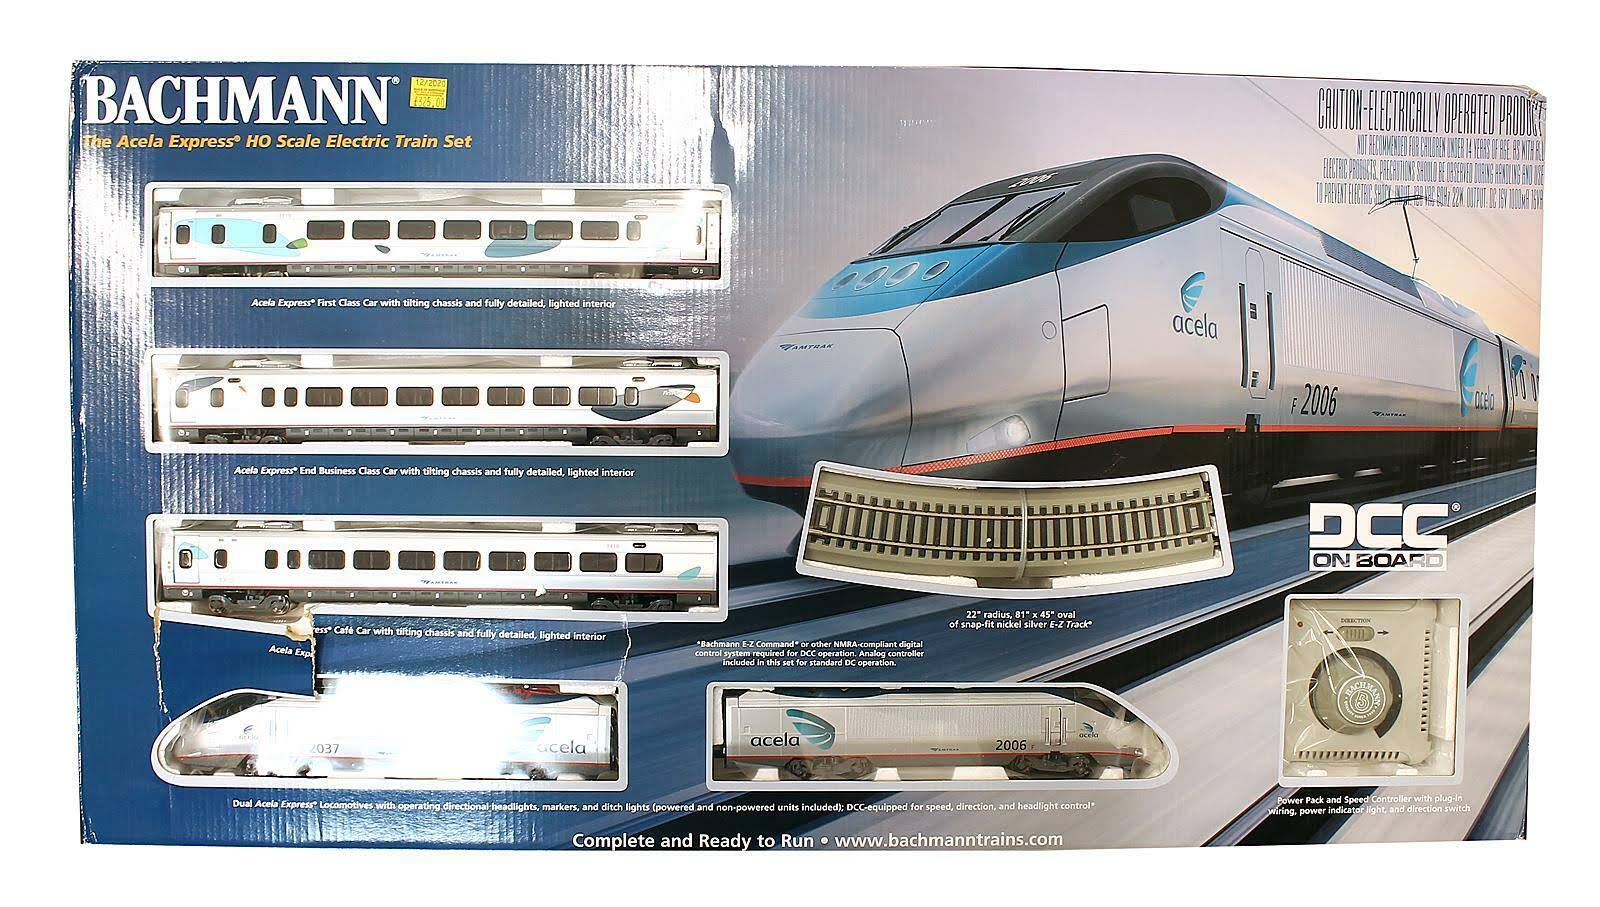 Bachmann Spectrum 'HO' Gauge 01205 The Acela Express Train Set *DCC Fitted*